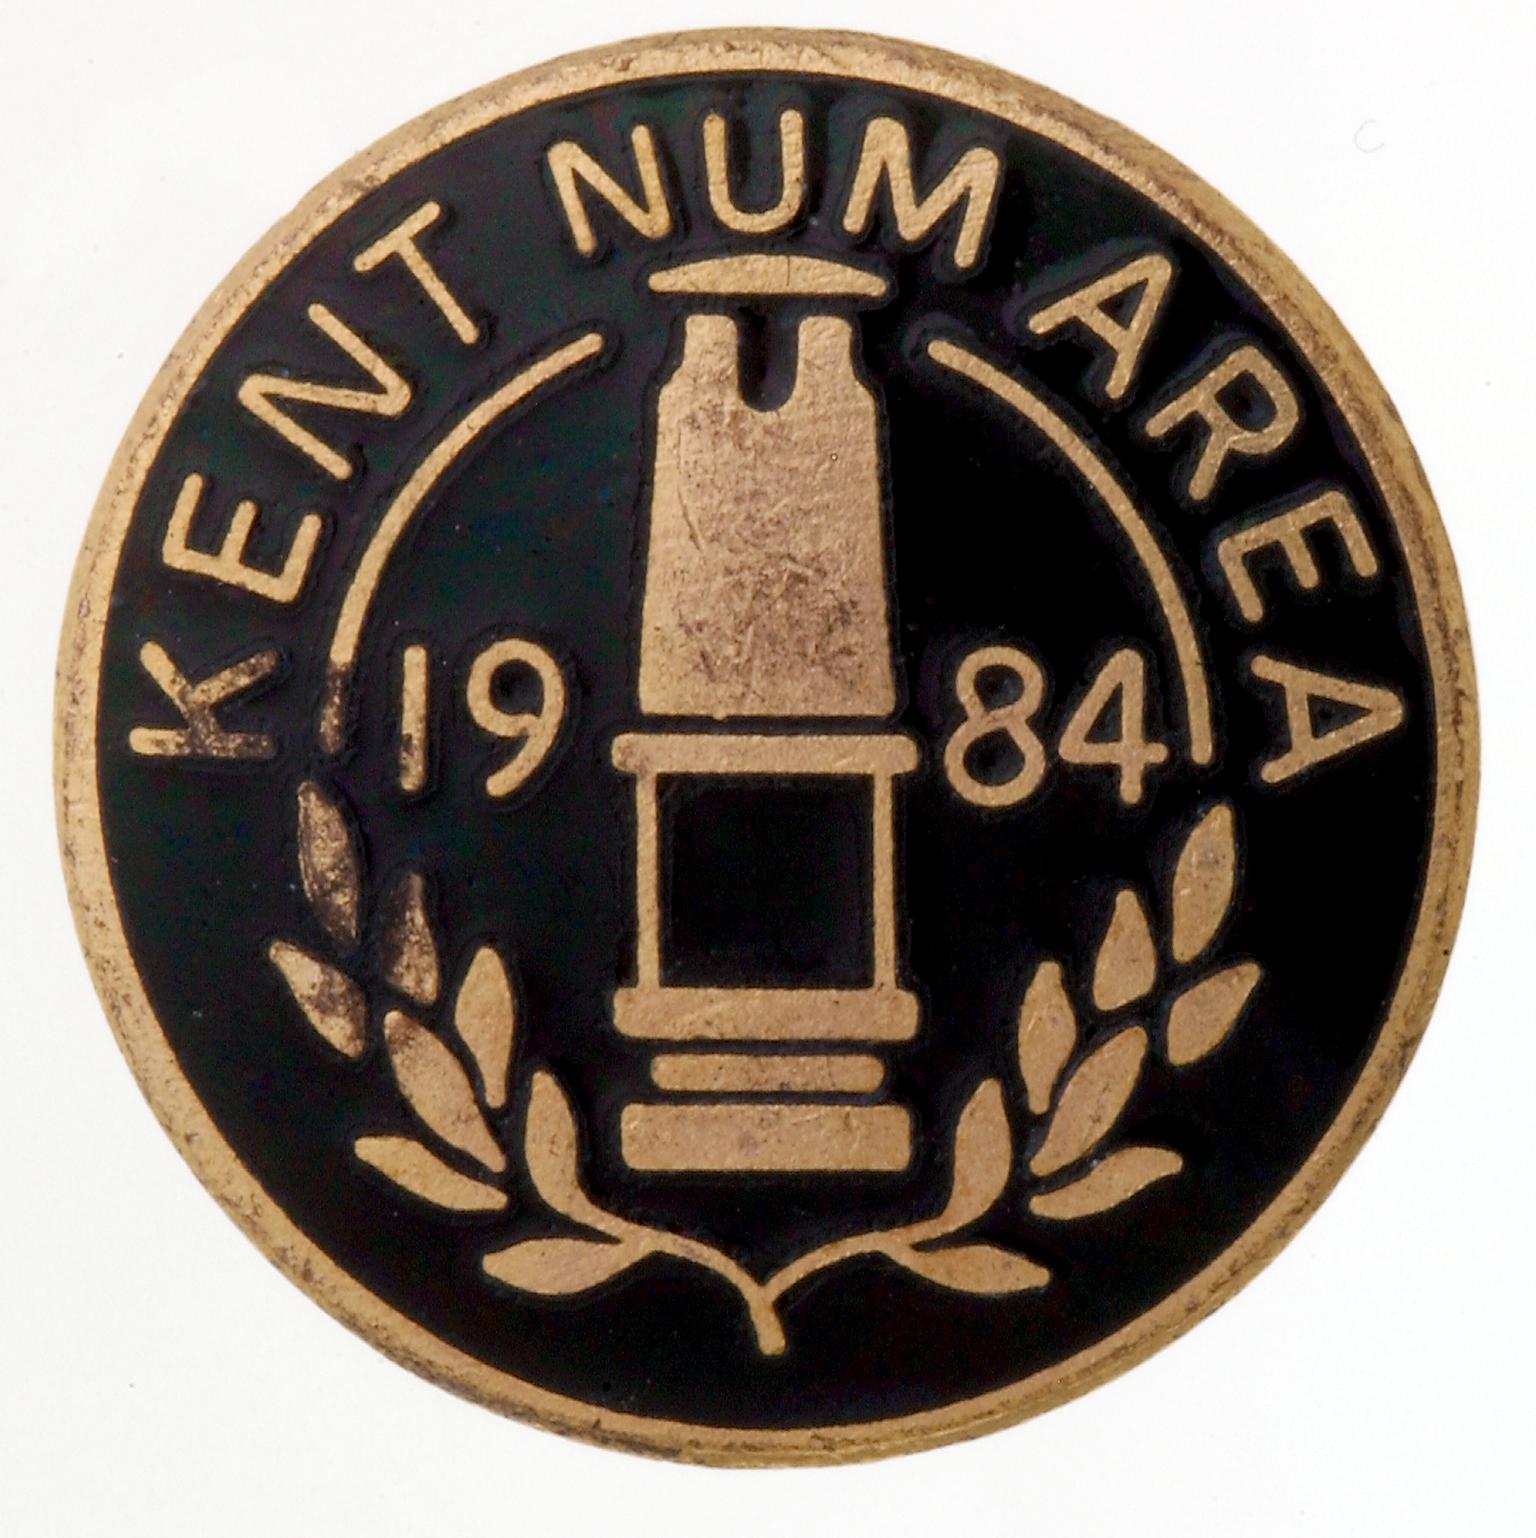 N.U.M. Kent Area, badge